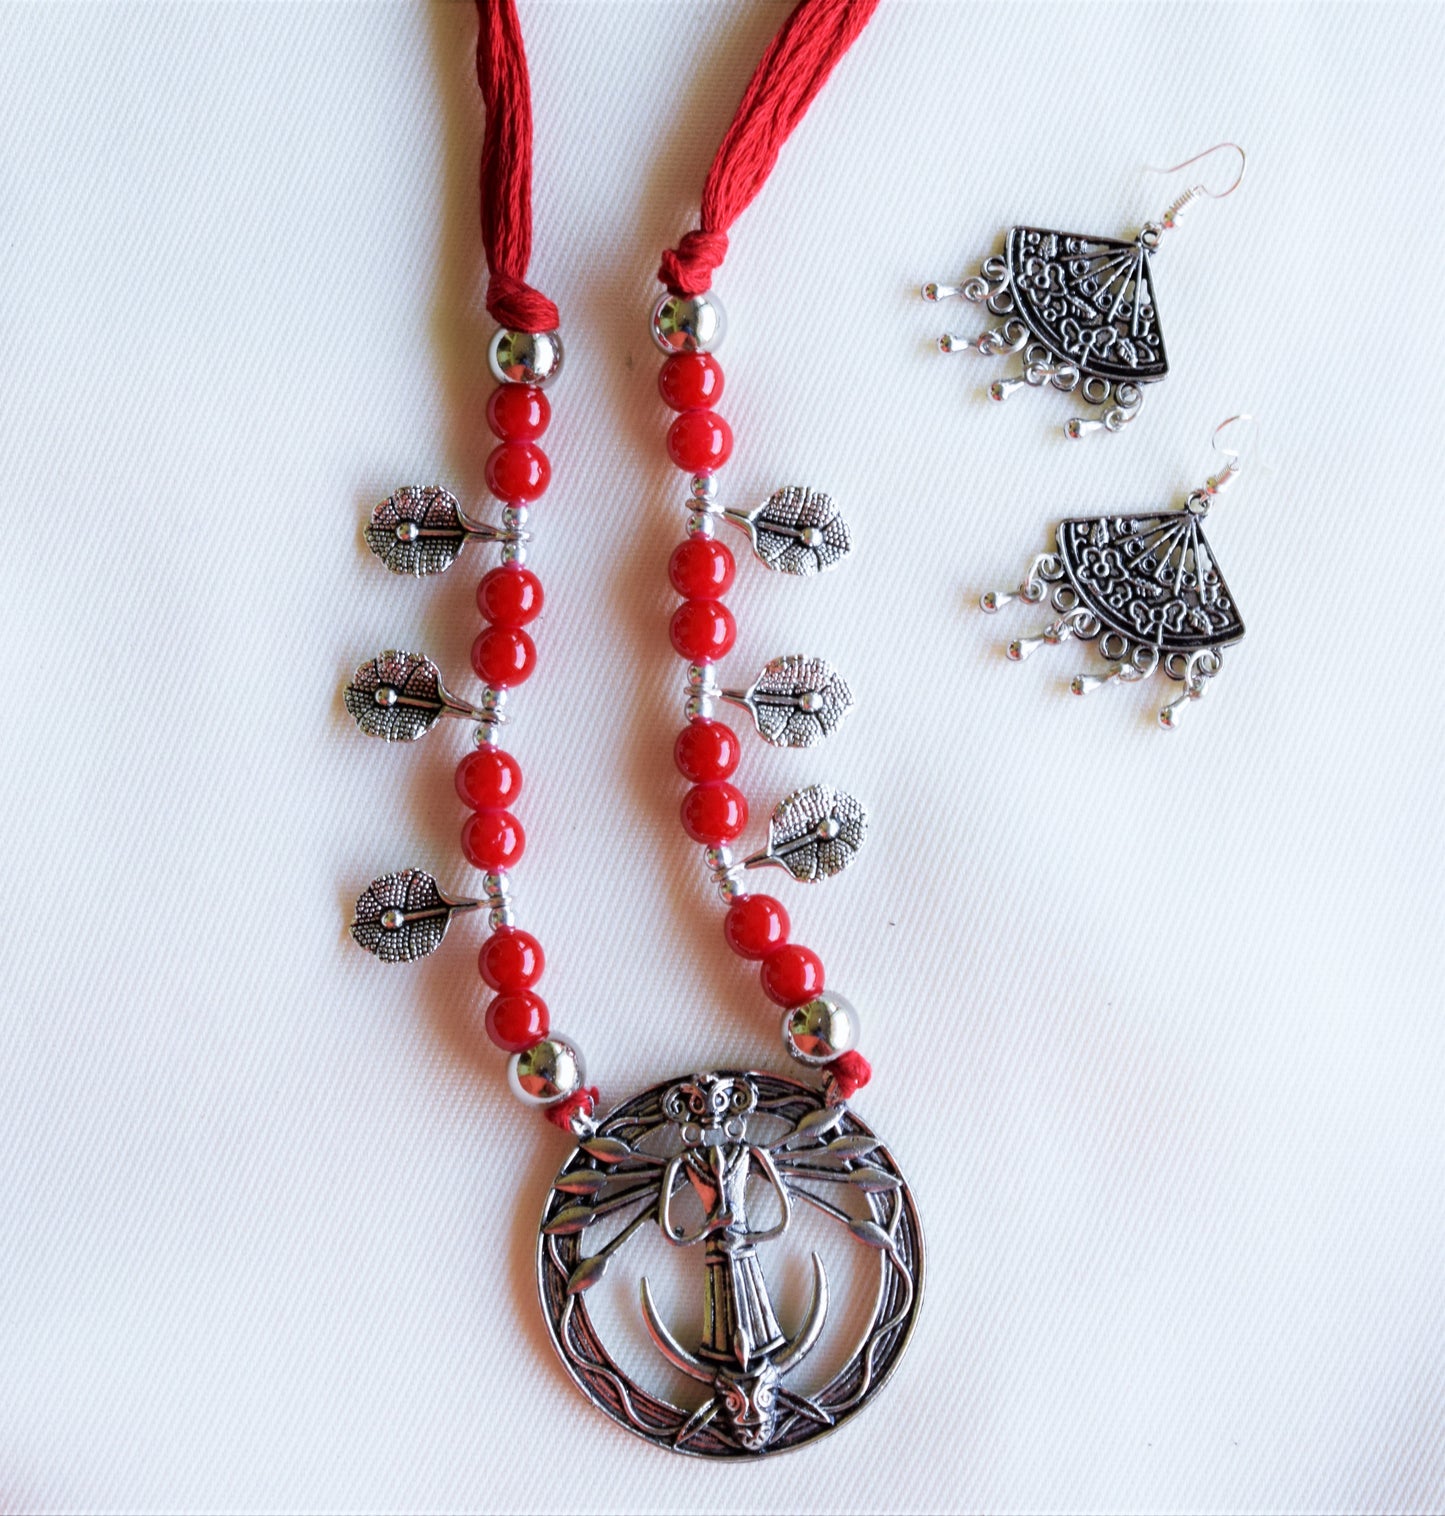 Goddess Durga Mahishasur Mardini Pendant Bead Necklace Set